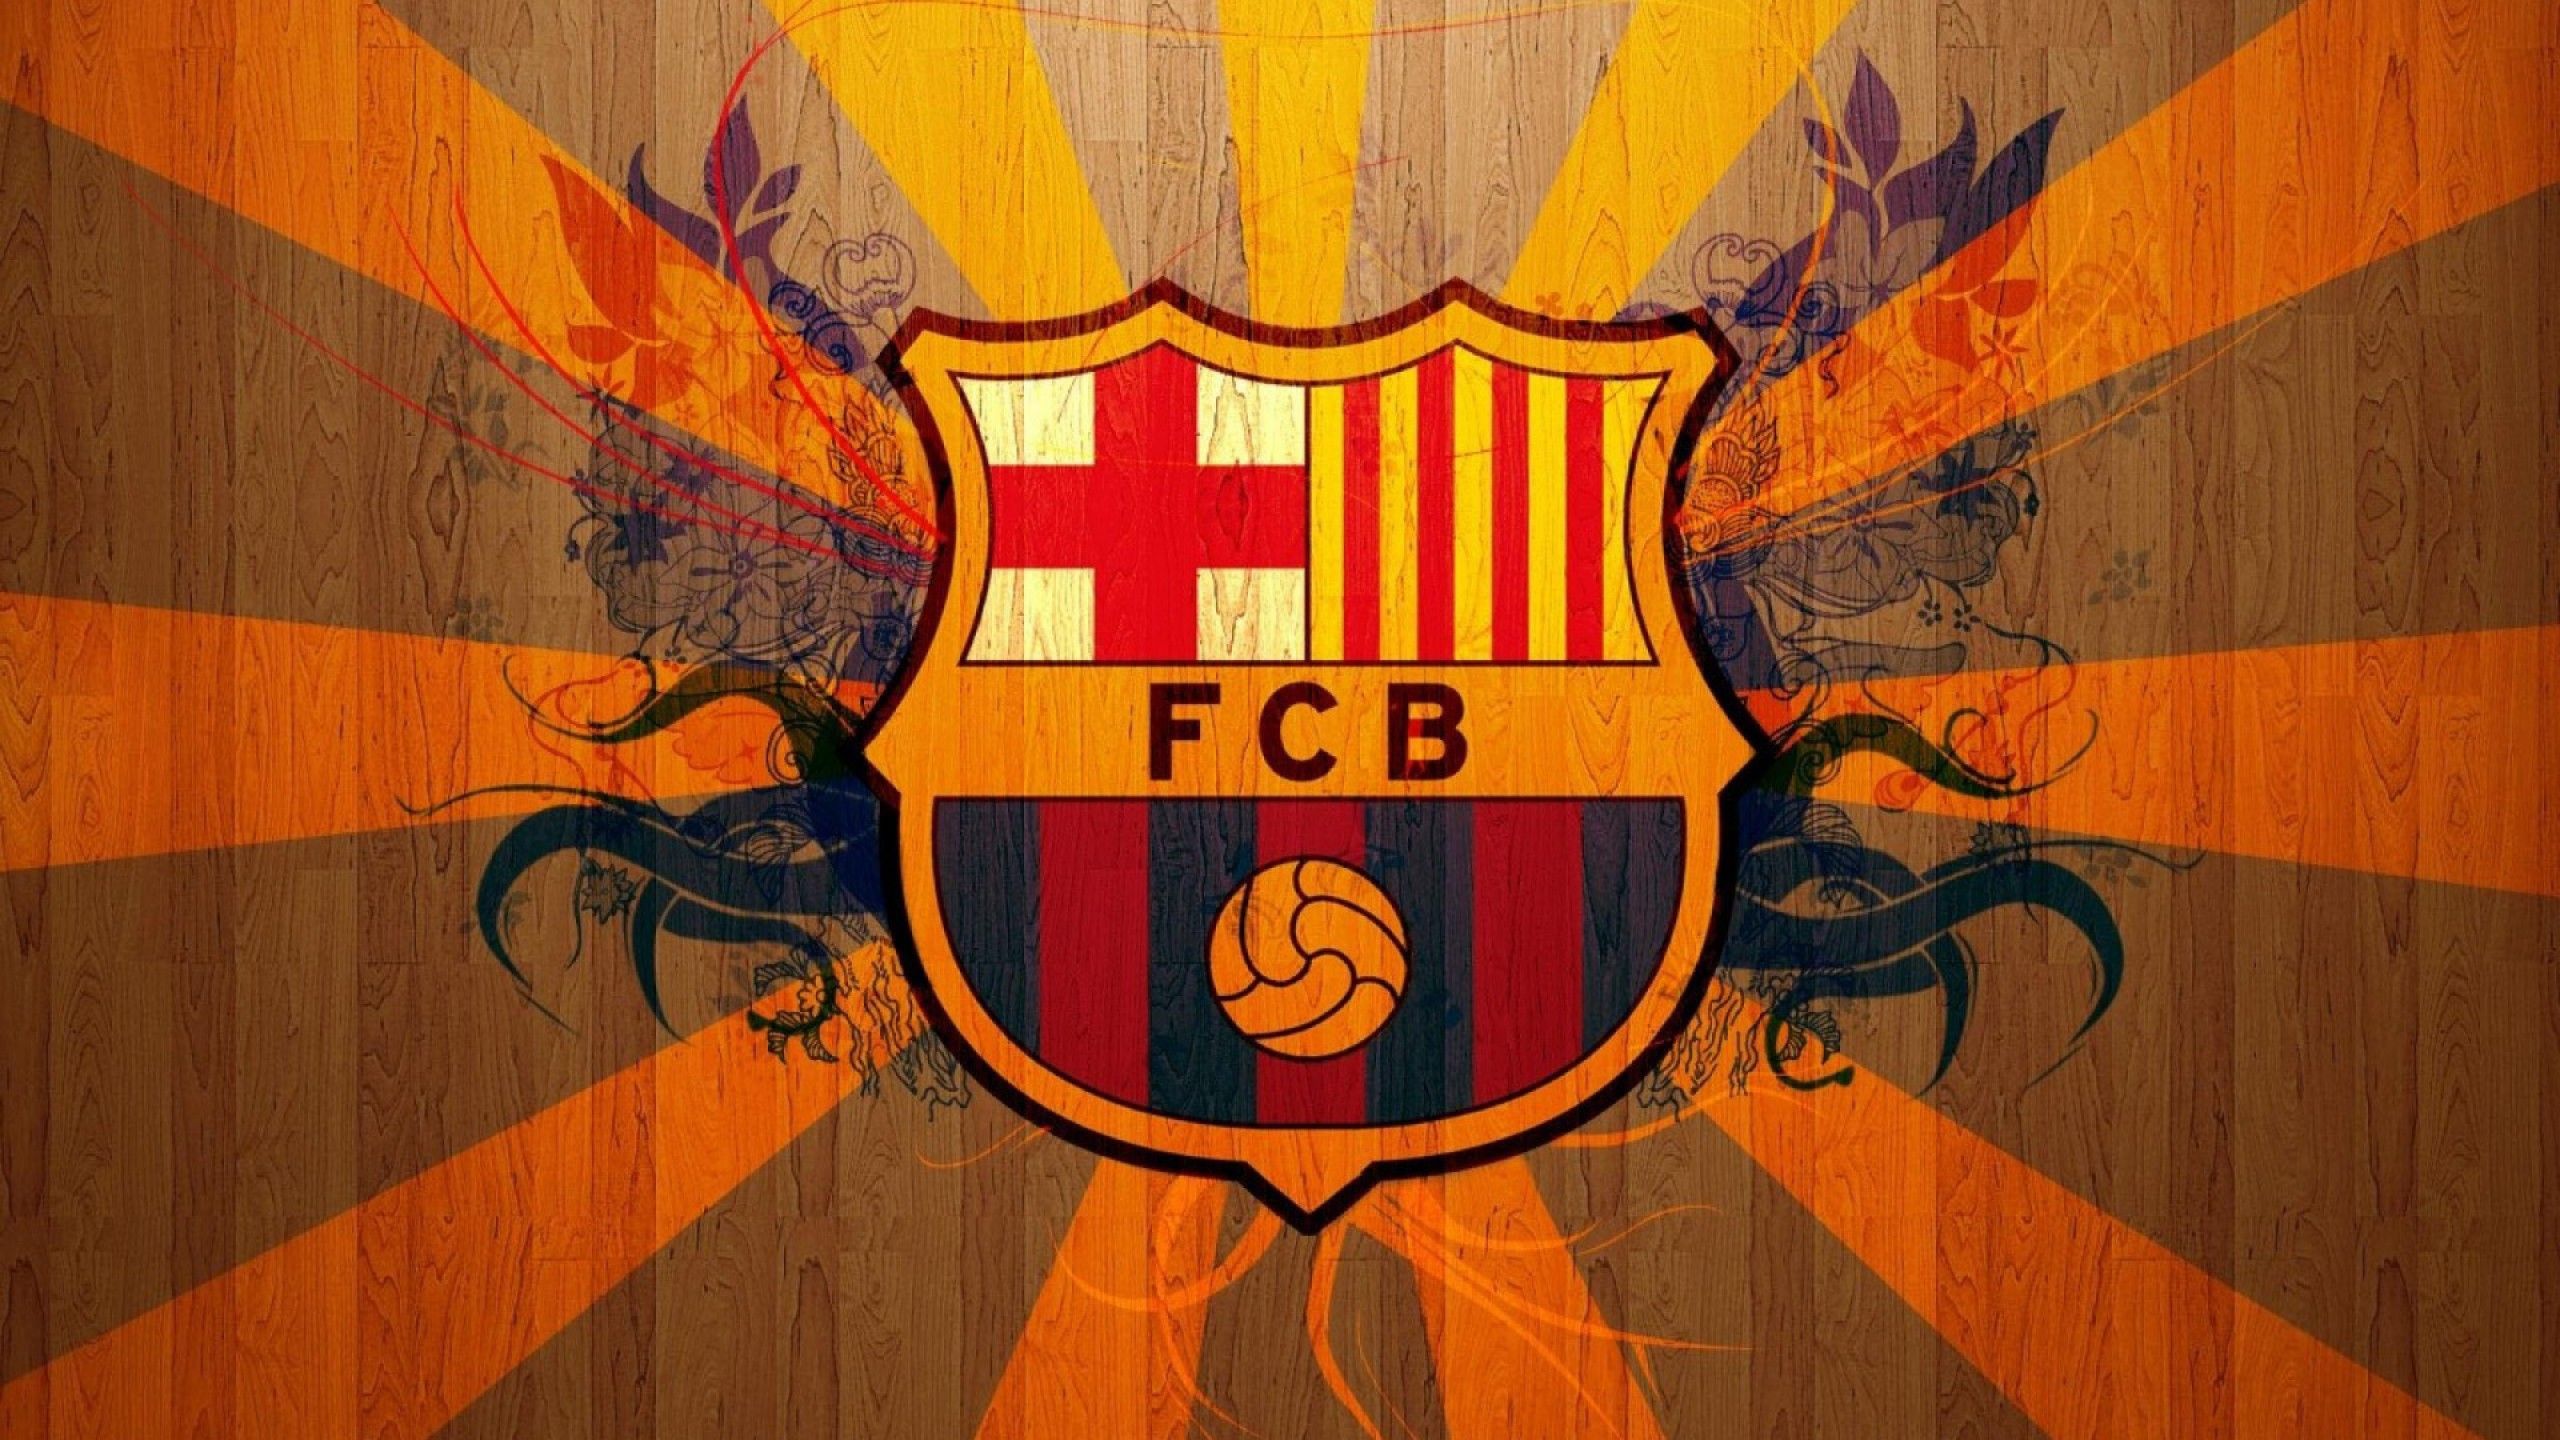  Barcelona Hintergrundbild 2560x1440. Fc Barcelona Logo, HD Sports, 4k Wallpaper, Image, Background, Photo and Picture